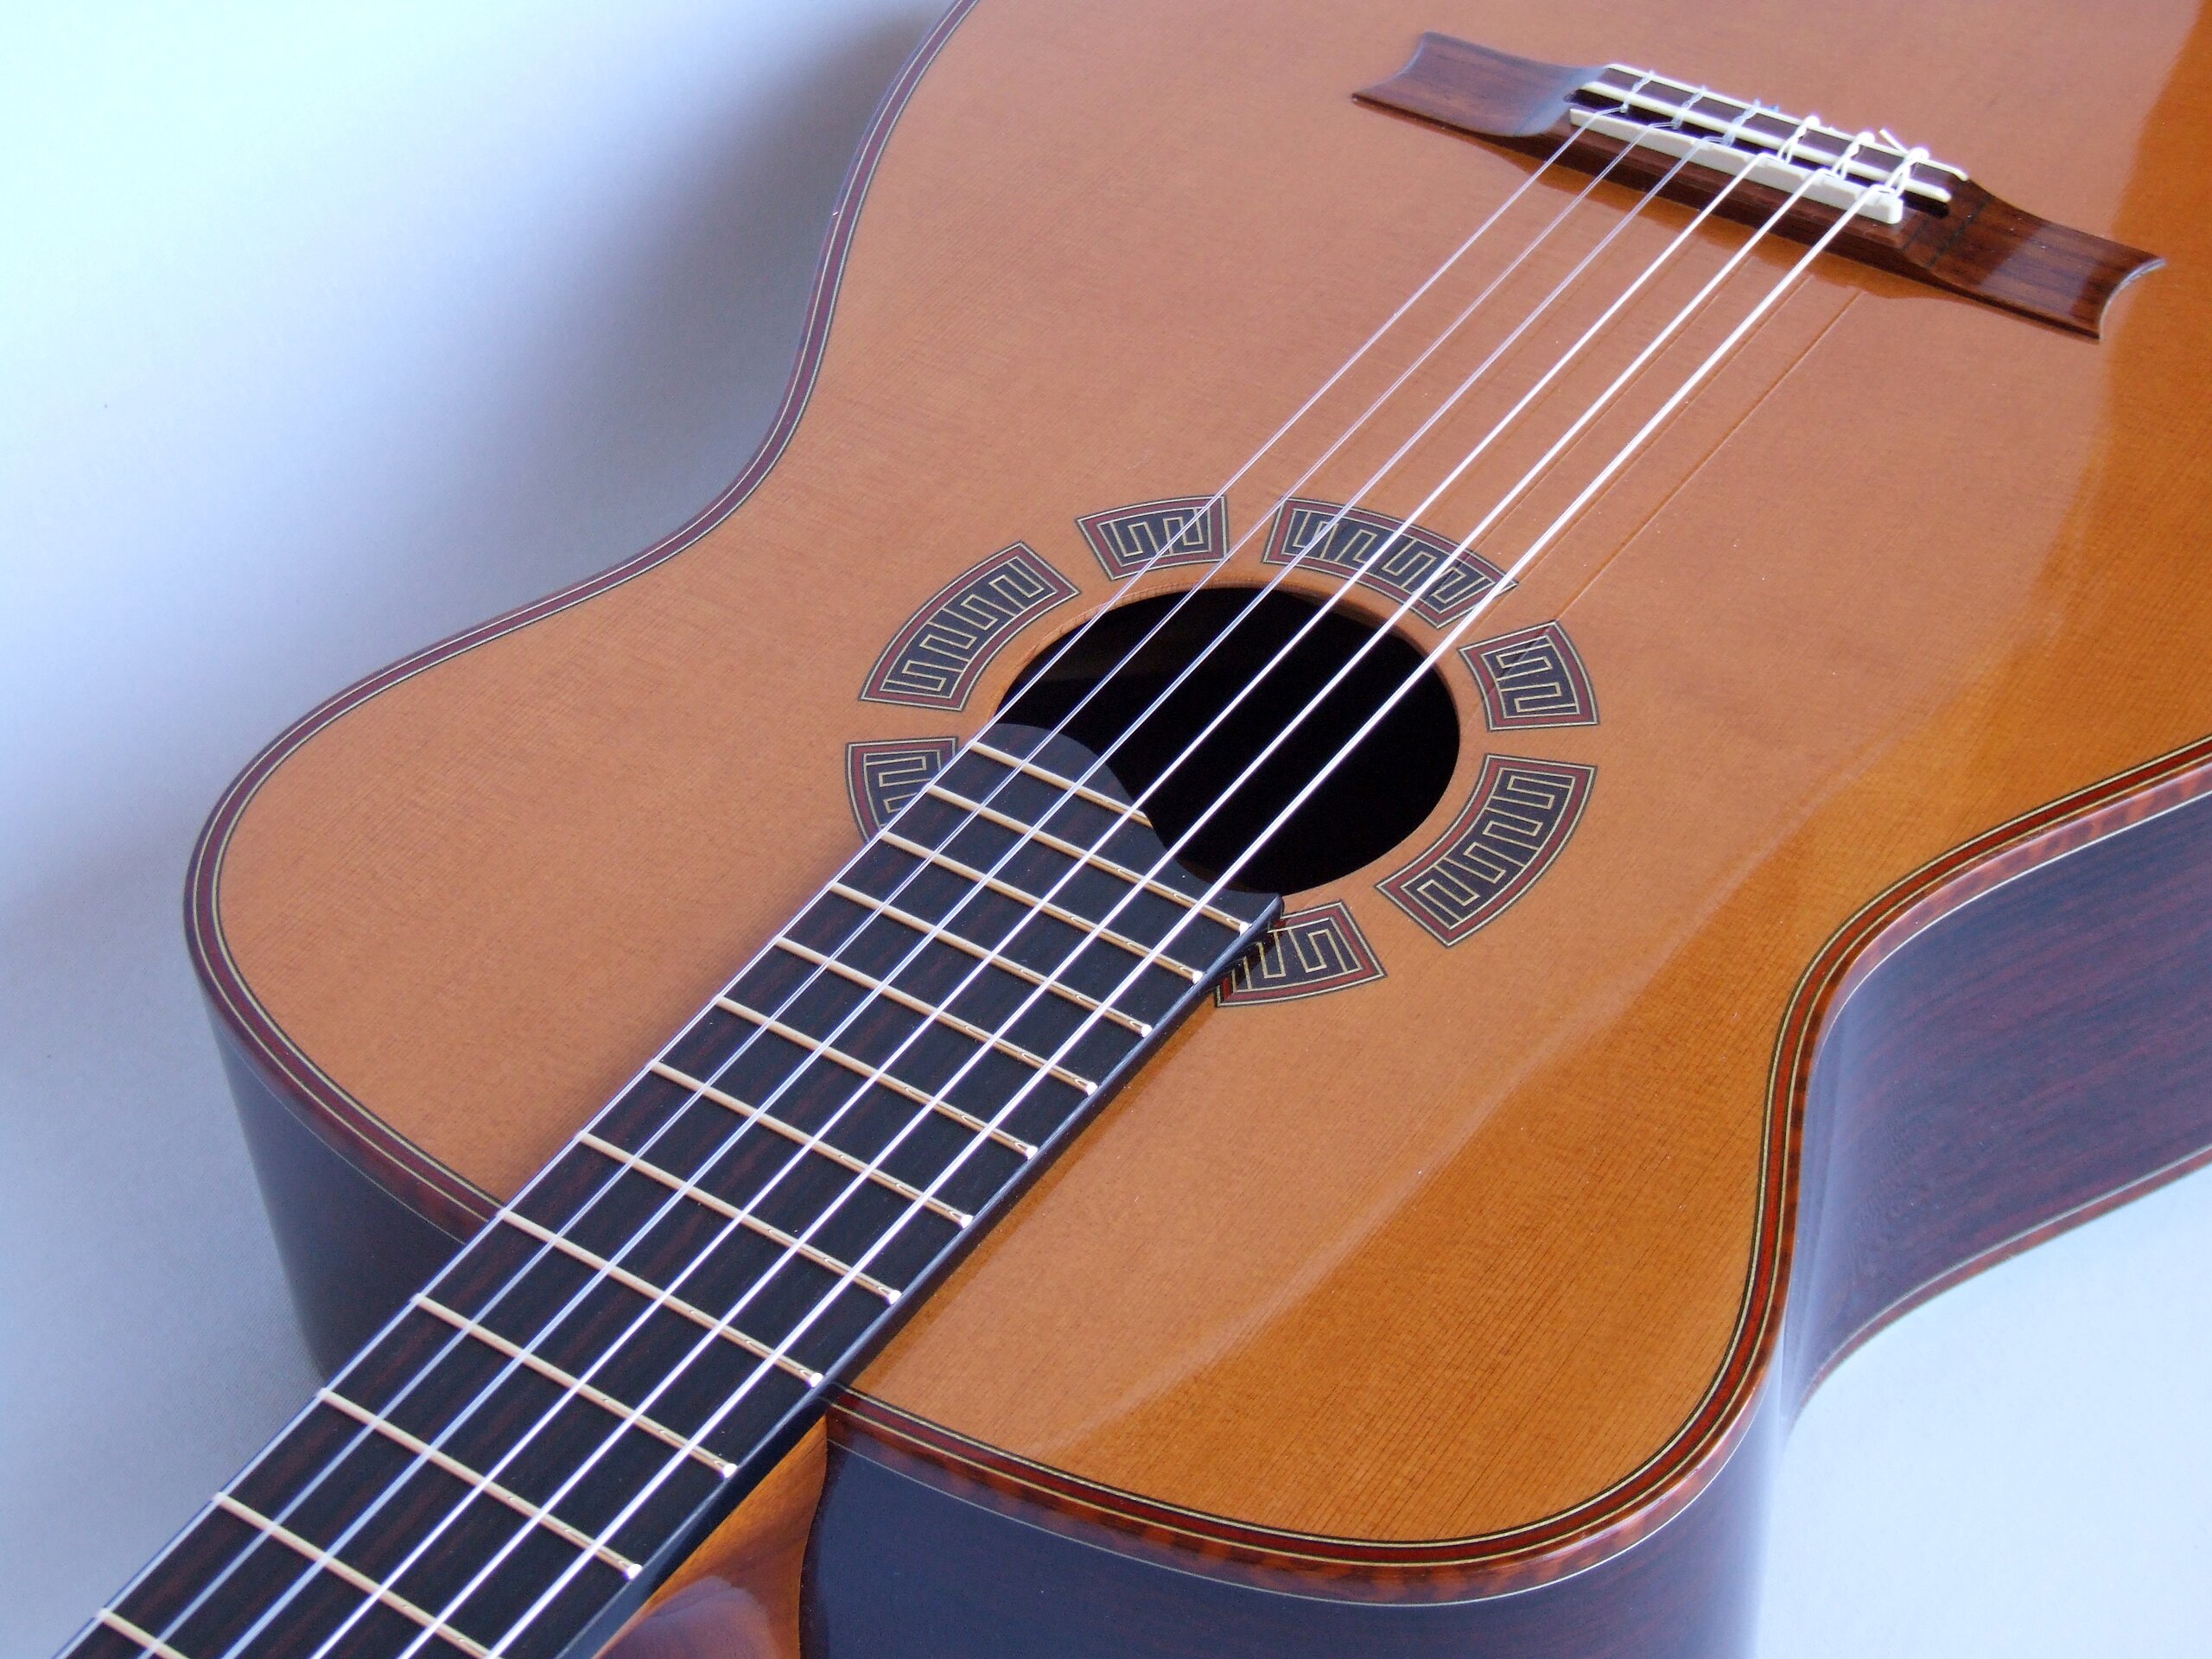 Cedar top classcial guitar with segmented rosette and snakewood bindings